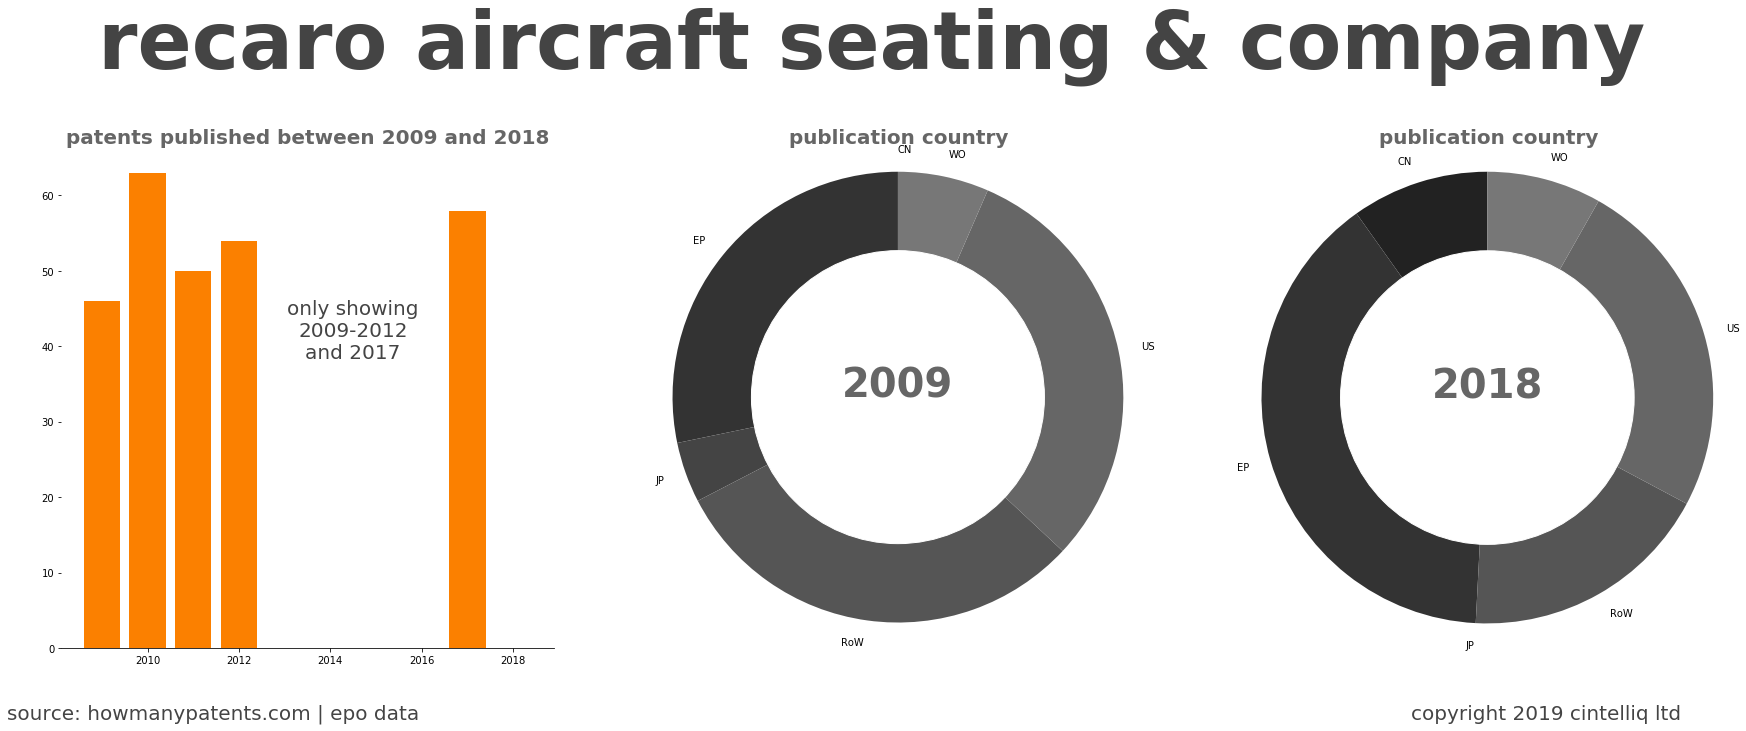 summary of patents for Recaro Aircraft Seating & Company